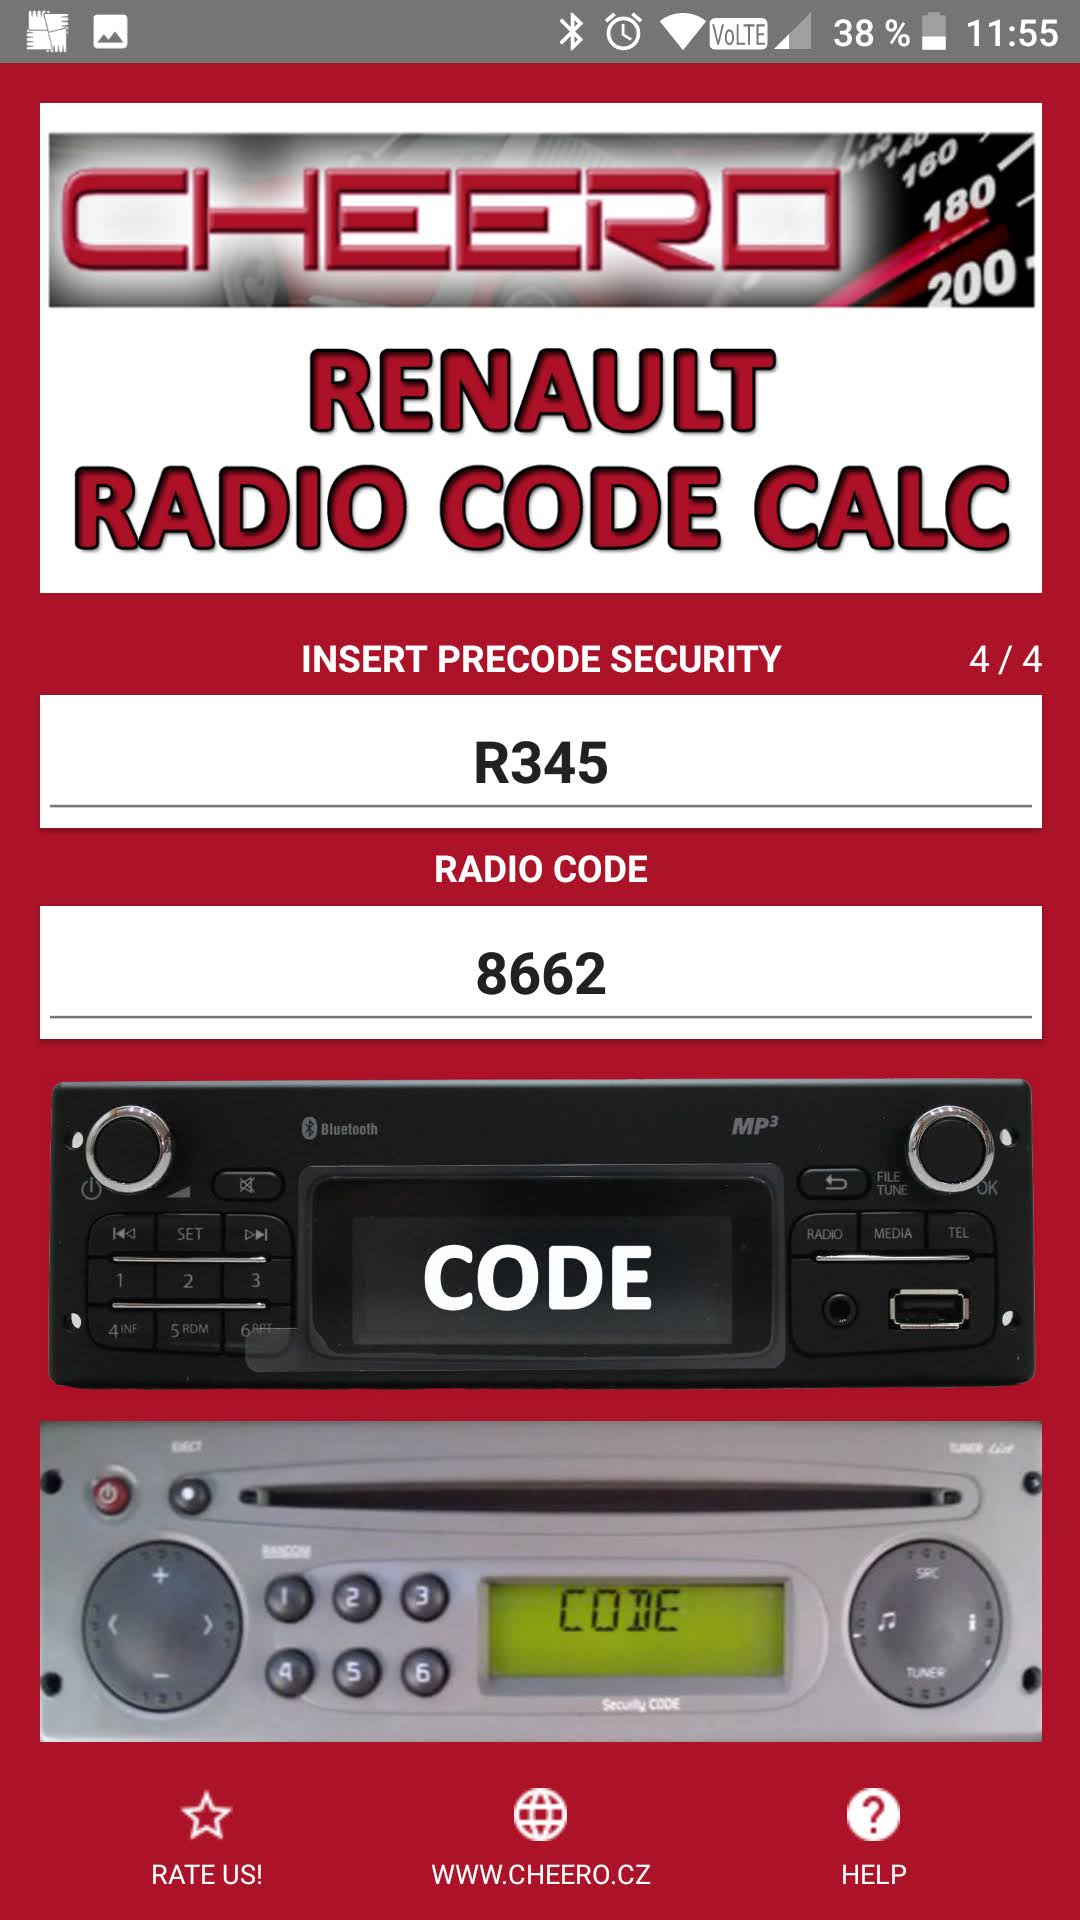 RENAULT RADIO CODE CALC